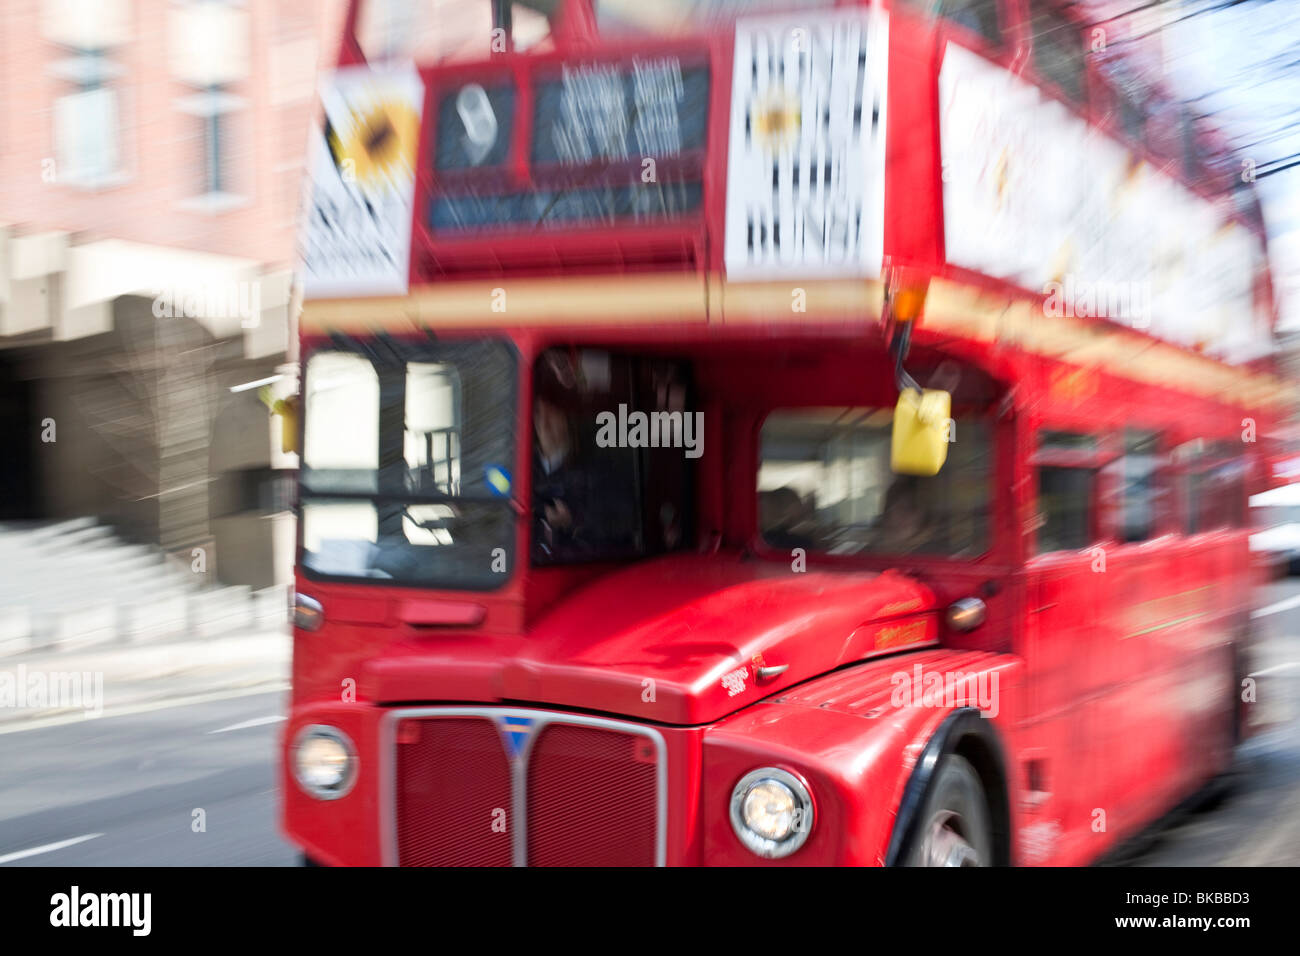 Red London double decker bus. Knightsbridge, London, England, UK Stock Photo